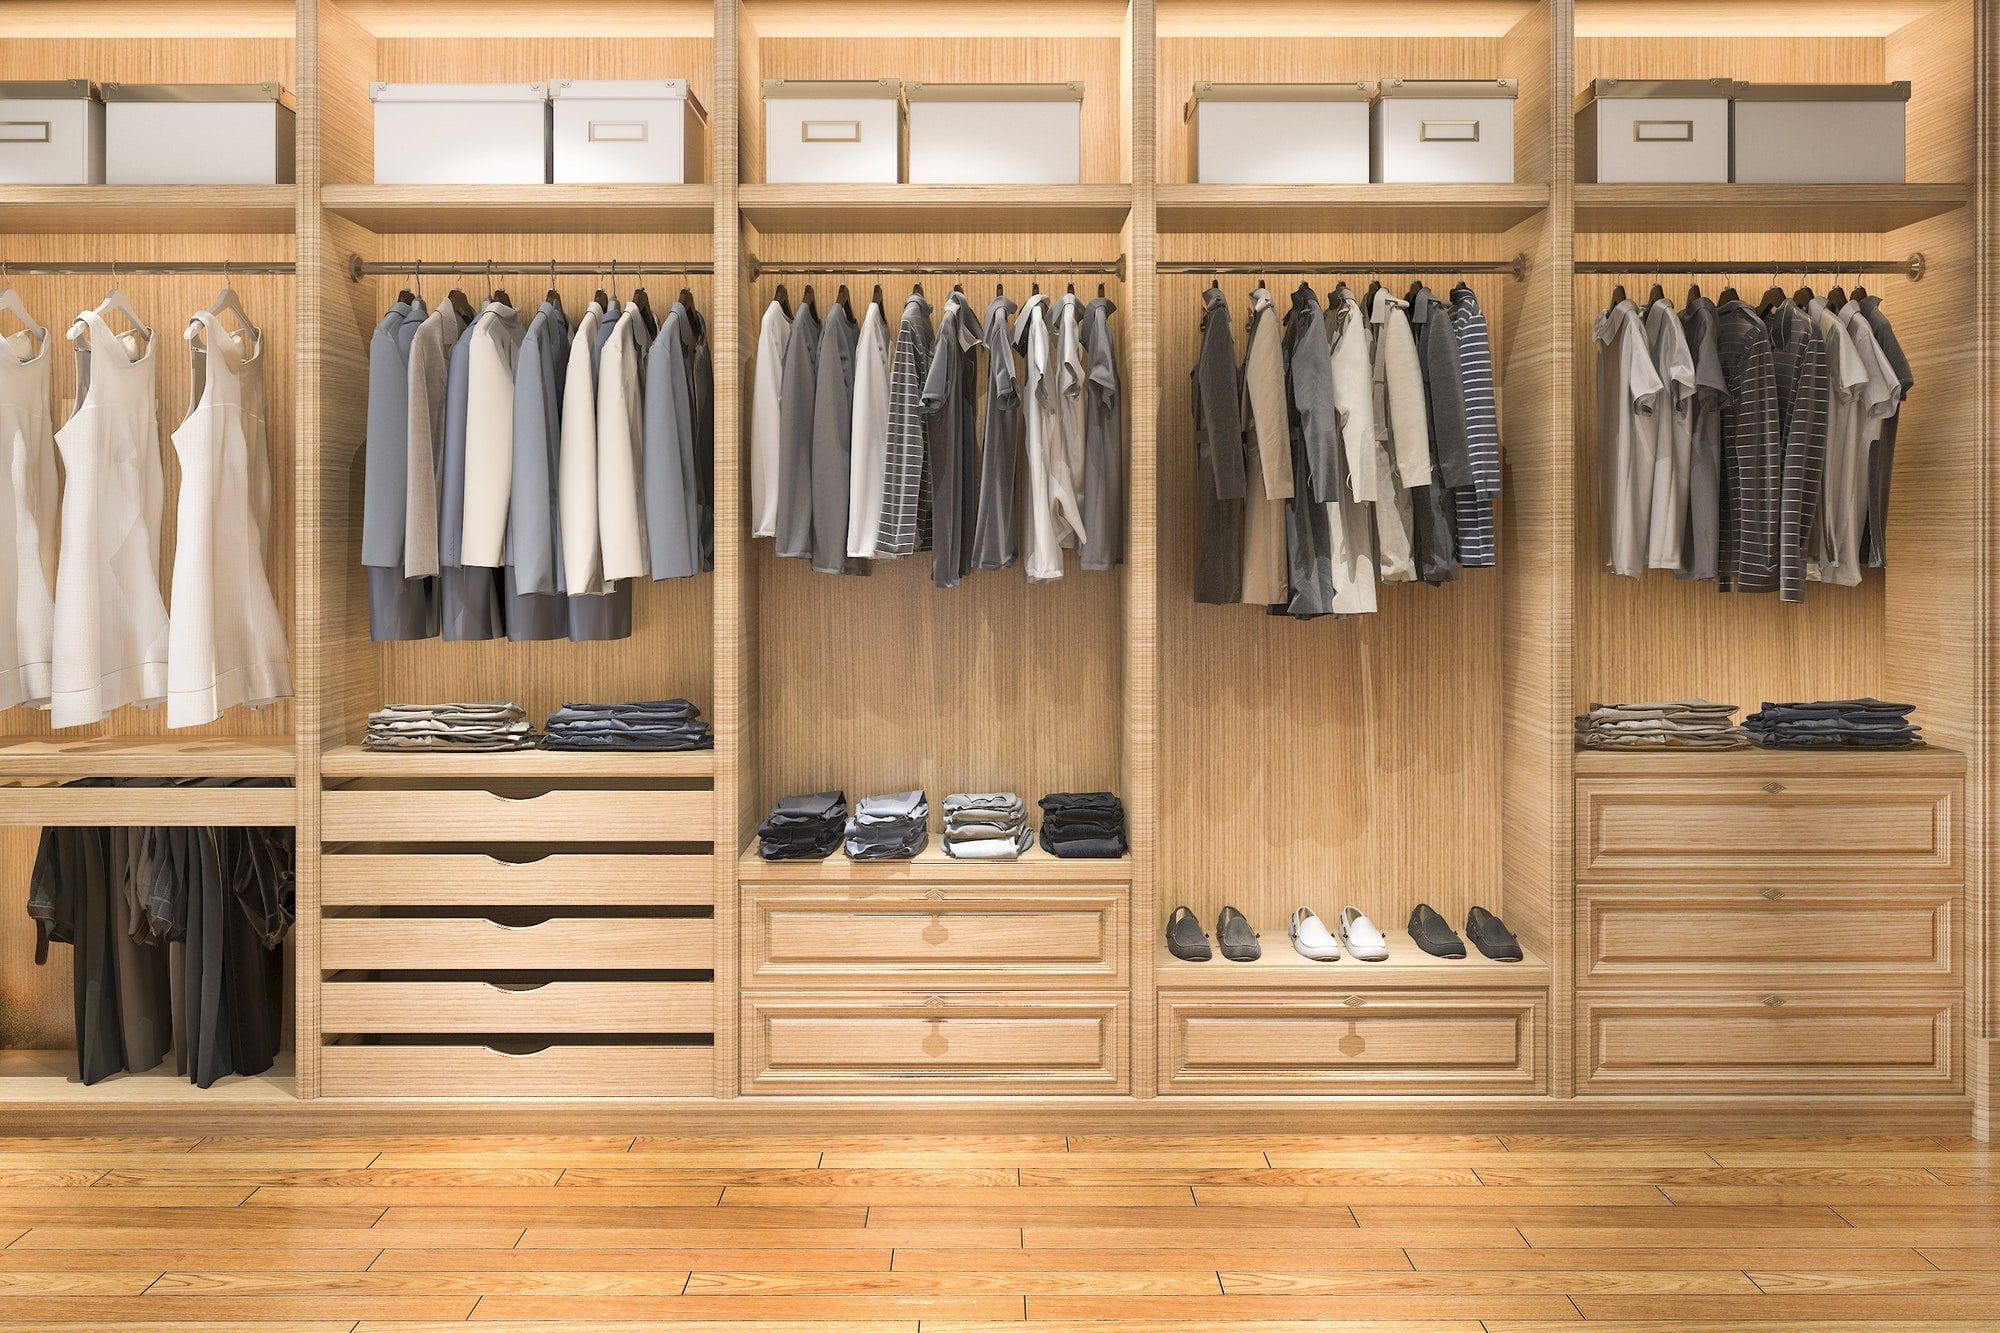 3d rendering modern scandinavian white wood walk in closet with wardrobe